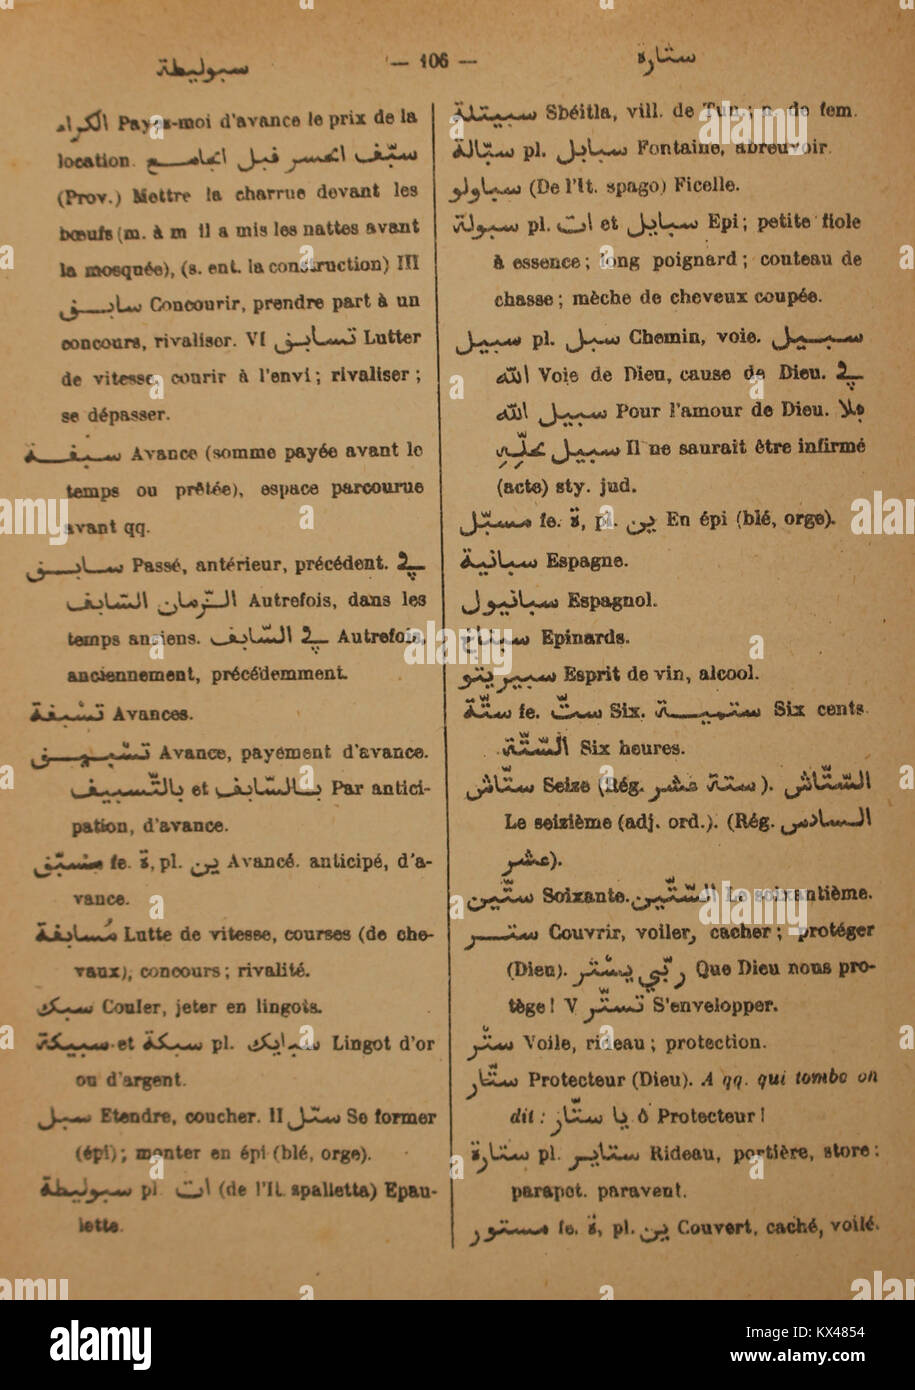 Wörterbuch Arabe-Fran çais par Alfred Nicolas (1938) p106 Stockfoto